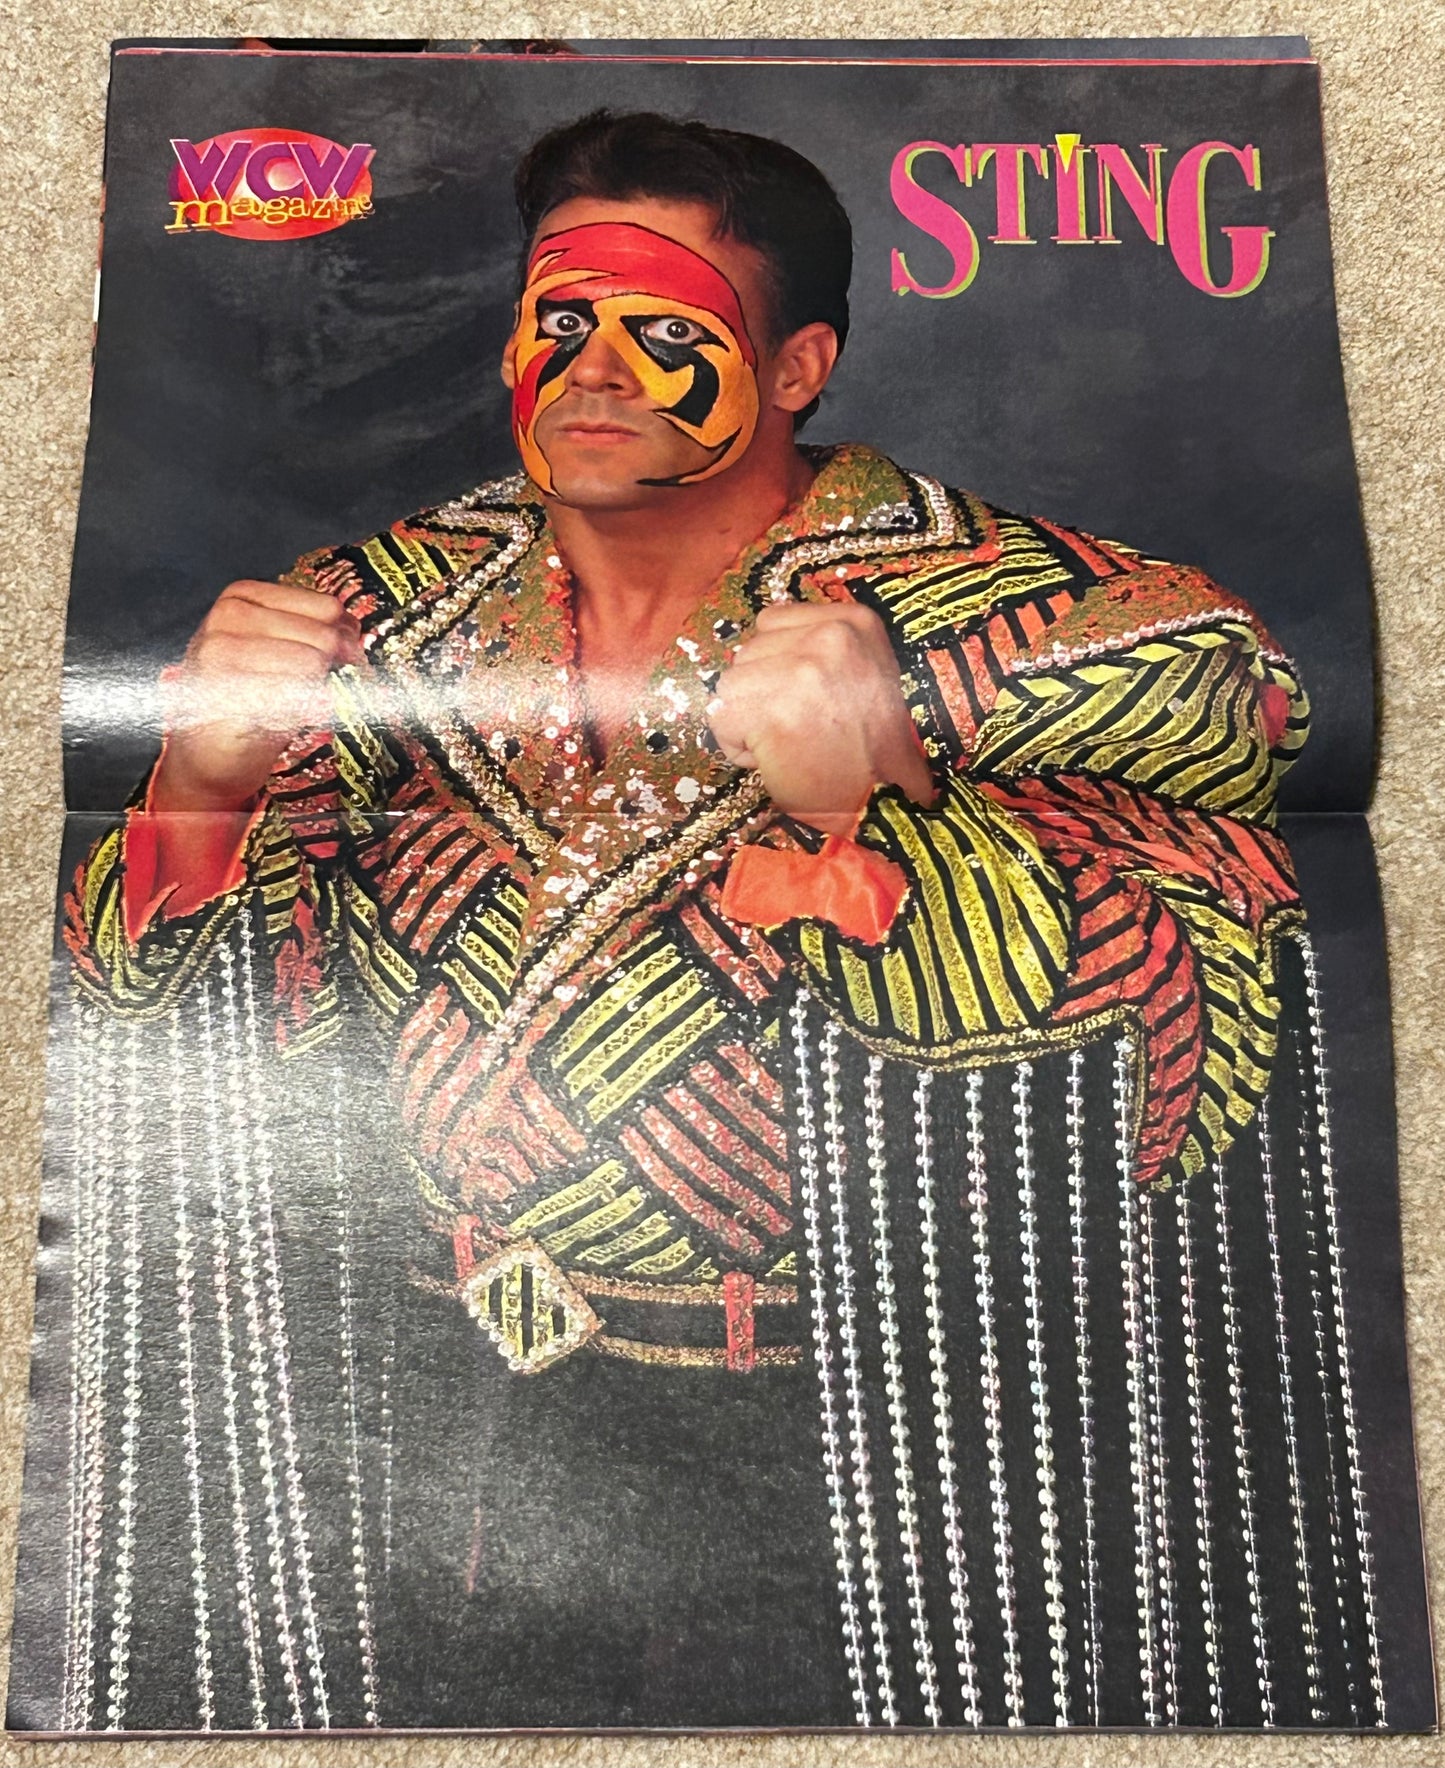 WCW Magazine September 1996 Issue 19